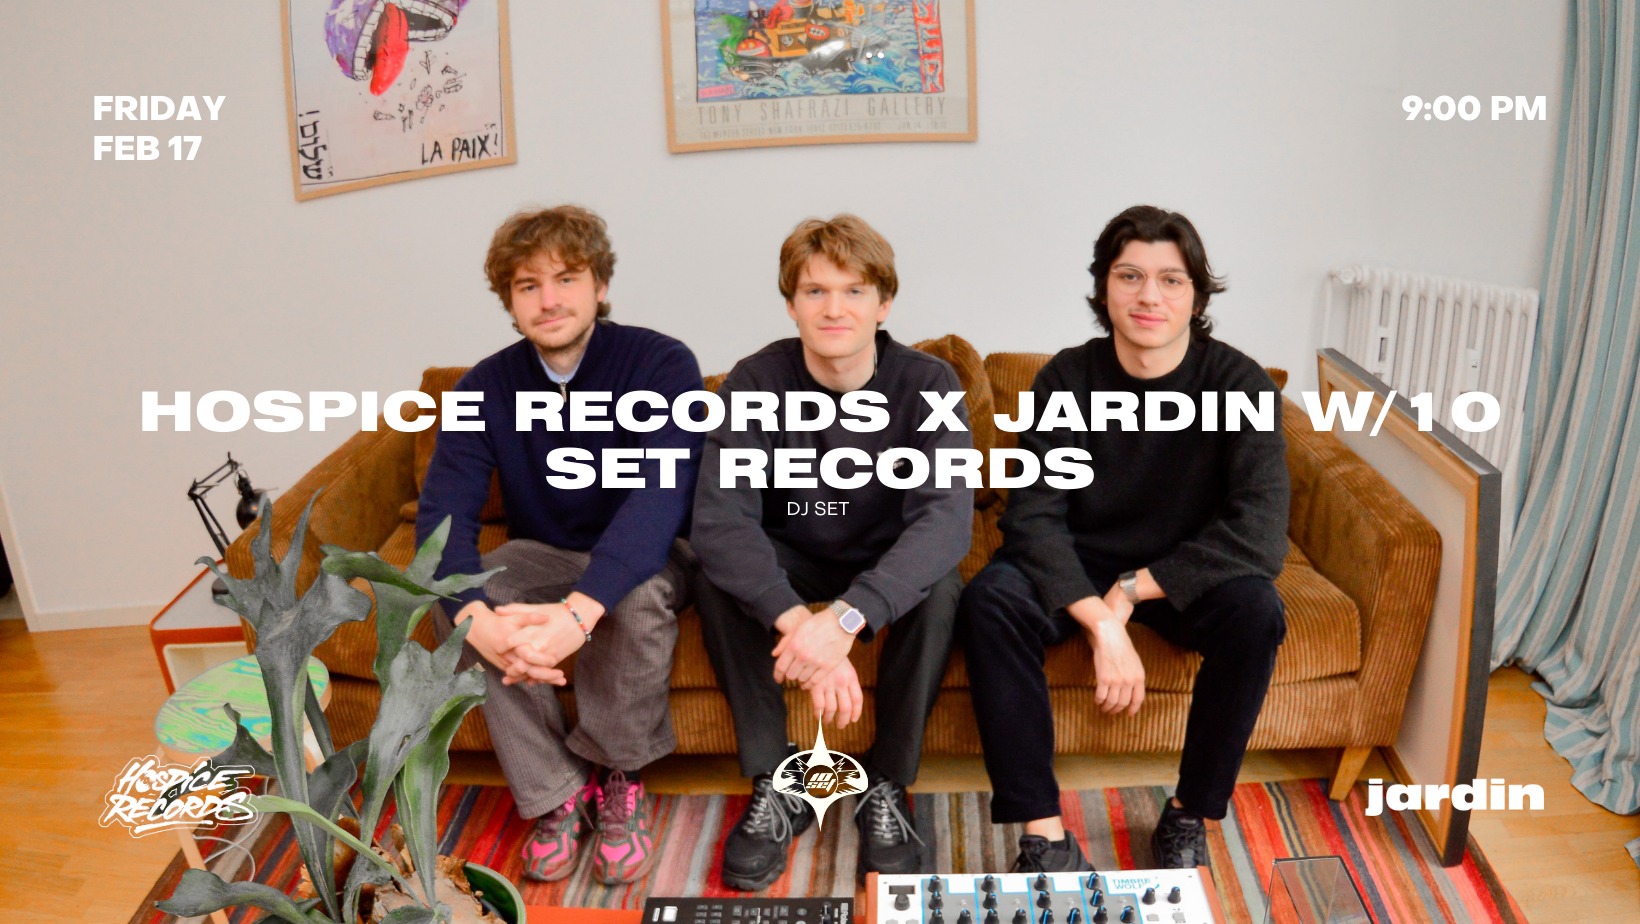 Hospice Records x Jardin w/ 10 SET Records au Jardin Hospice, Grand Hospice